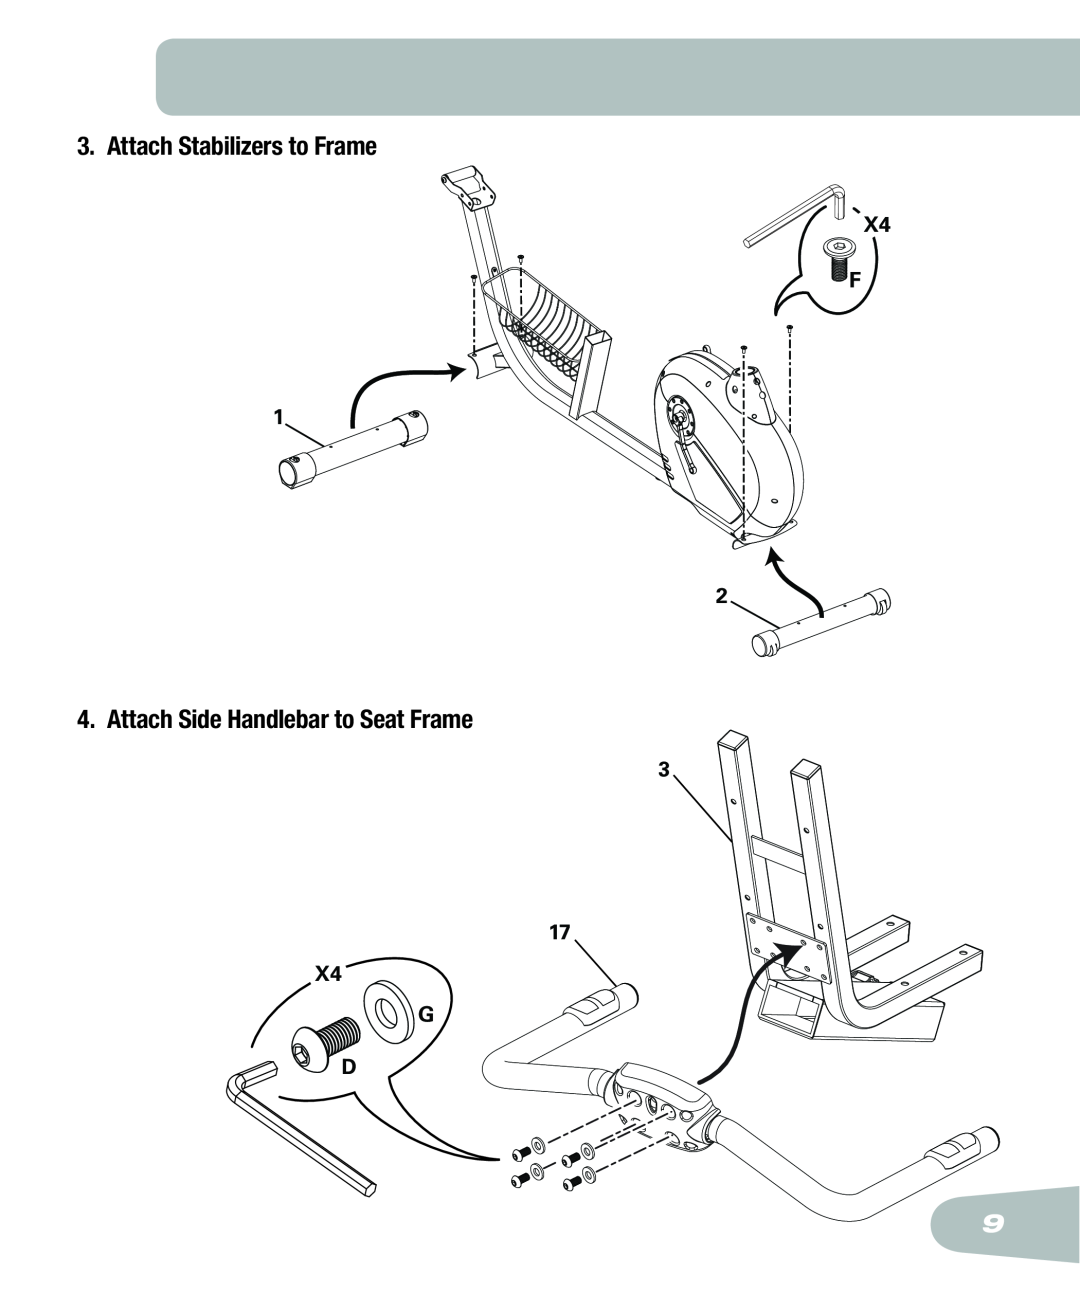 Schwinn 250 schwinn manual Attach Stabilizers to Frame, Attach Side Handlebar to Seat Frame, X4 F, X4 G D 